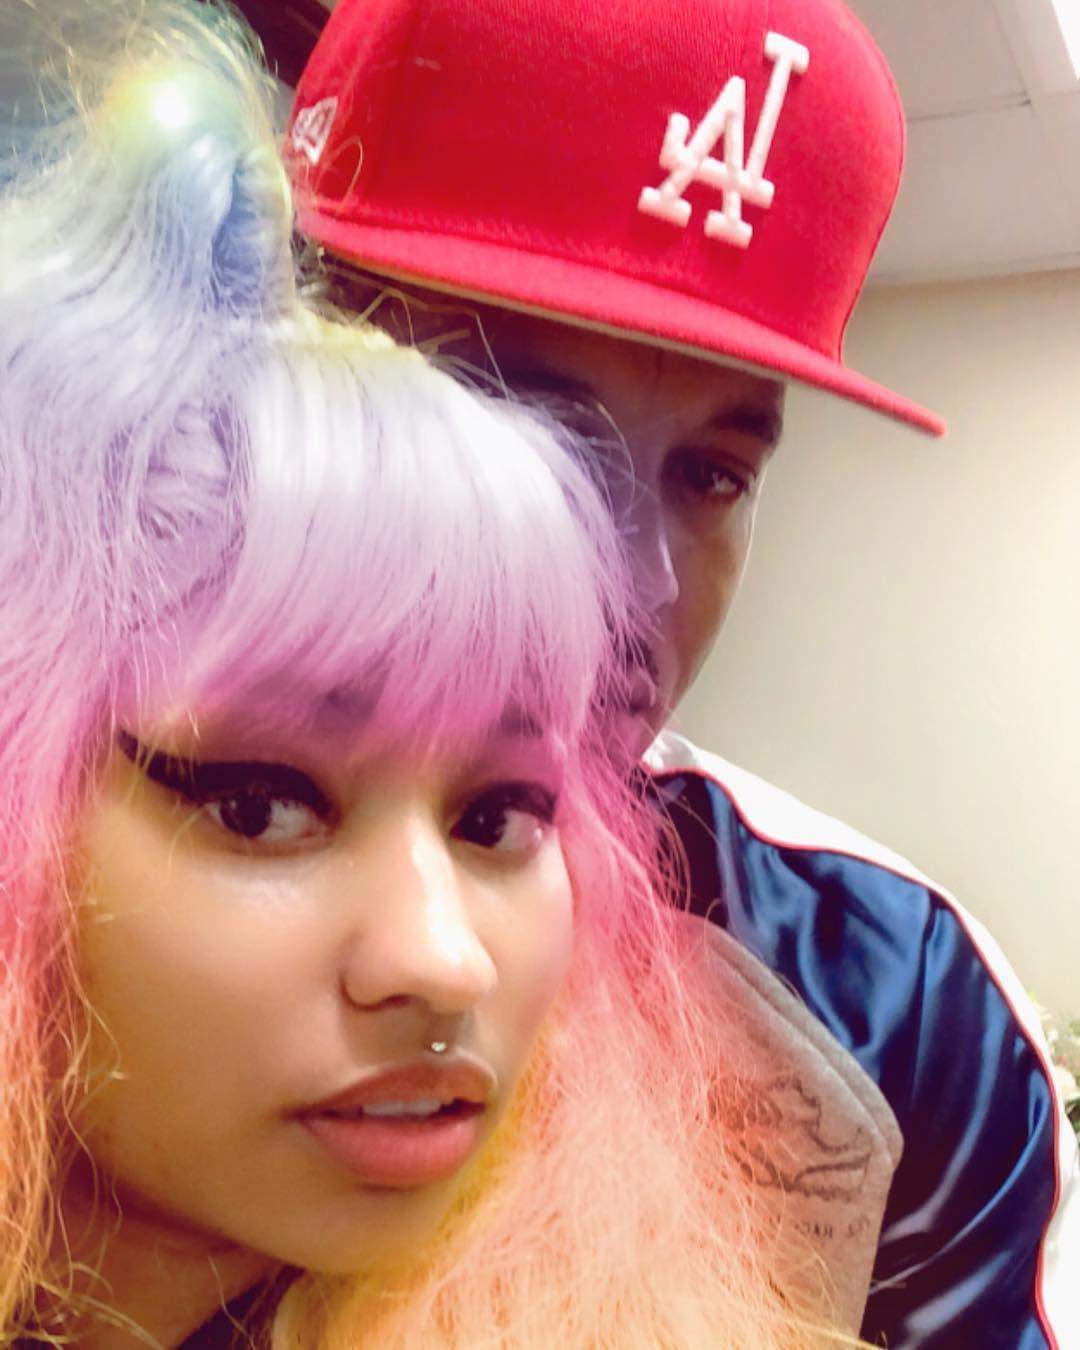 Nicki Minaj Still Boo'd Up In Booty-Grabbing Photos